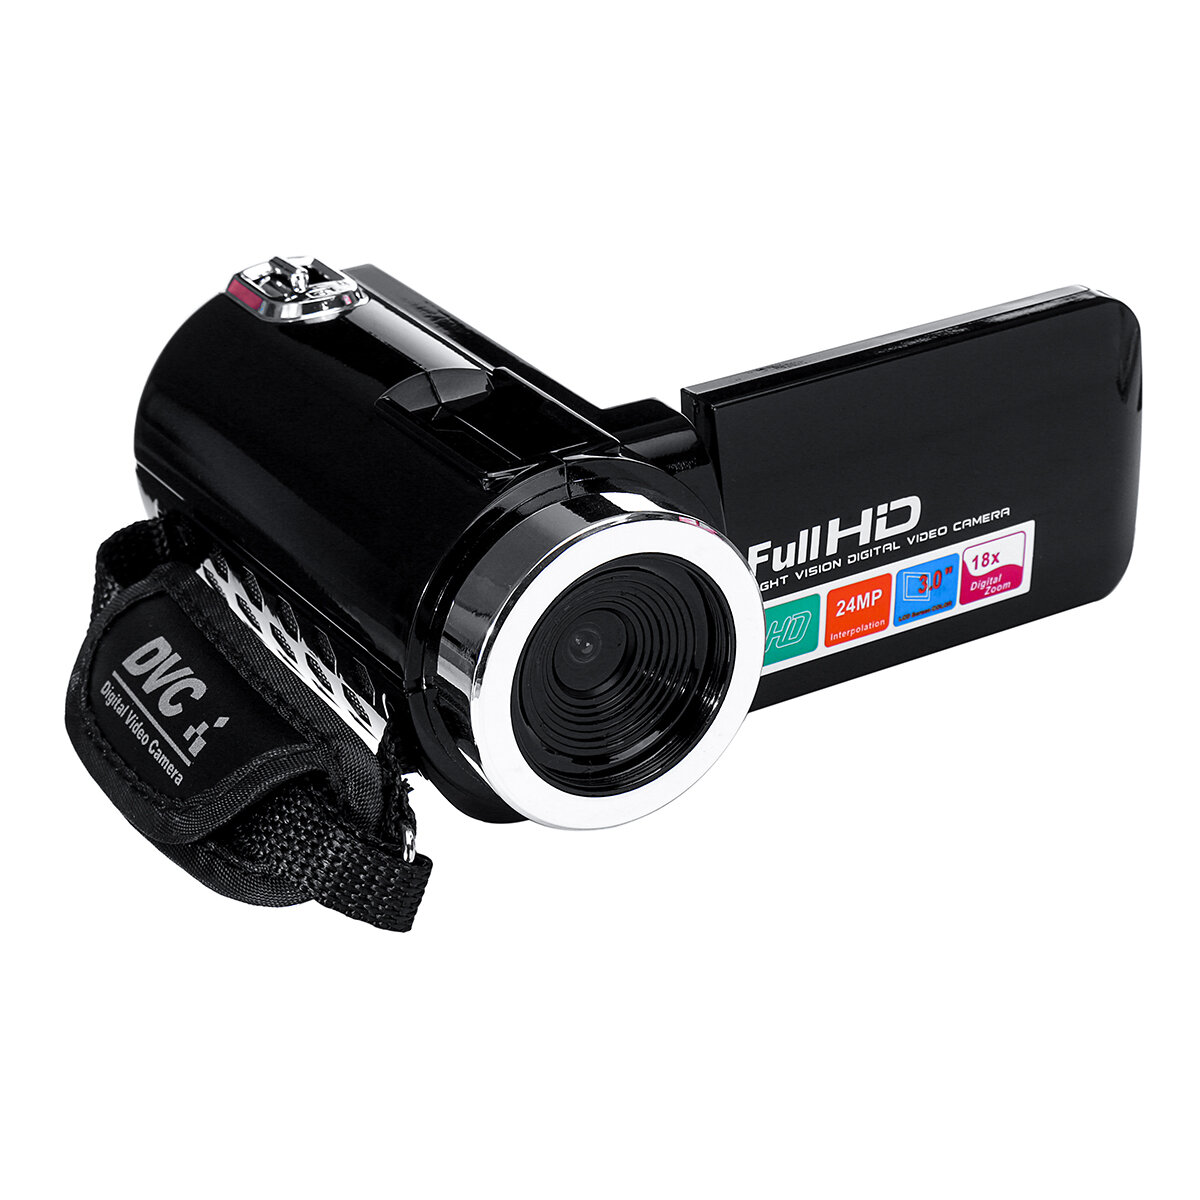 

4K Full HD 1080P 24MP 18X Zoom 3 дюймов LCD Цифровая видеокамера Video DV камера 5.0MP CMOS Датчик для видеоблогов YouTu